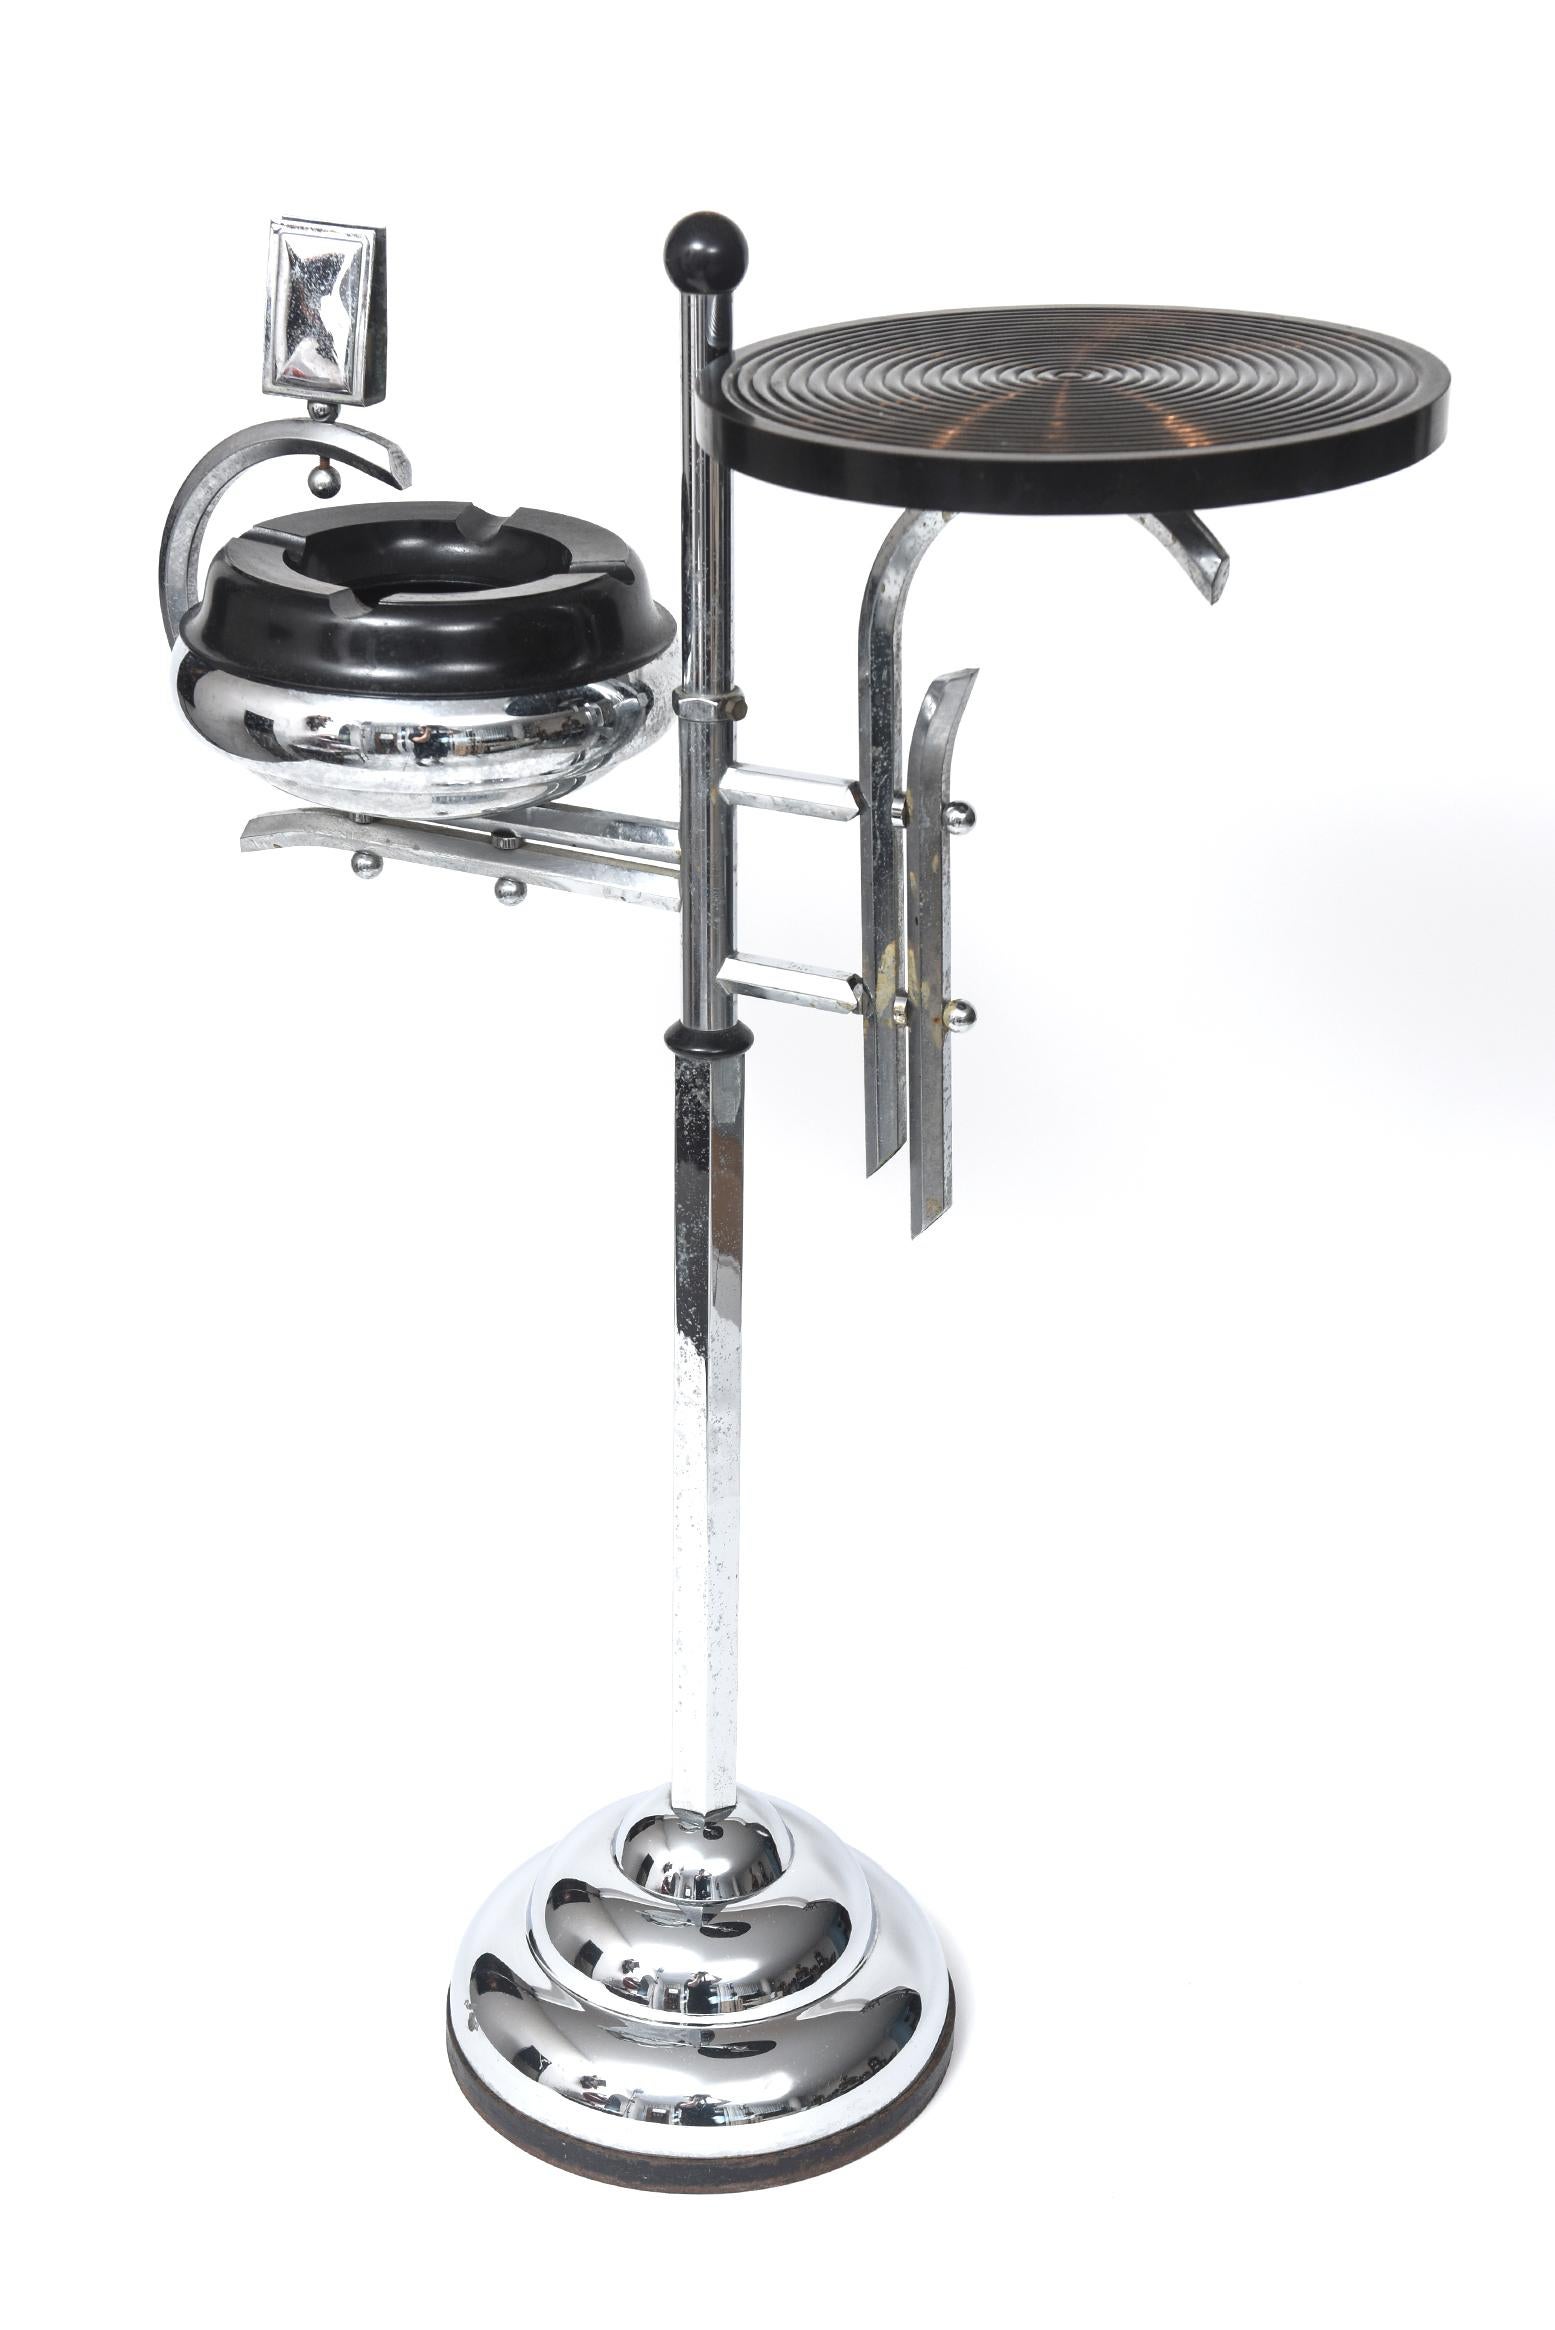 1930s Art Deco Ashtray Smoking Stand Chrome Bakelite Swivel Table by Demeyere 7